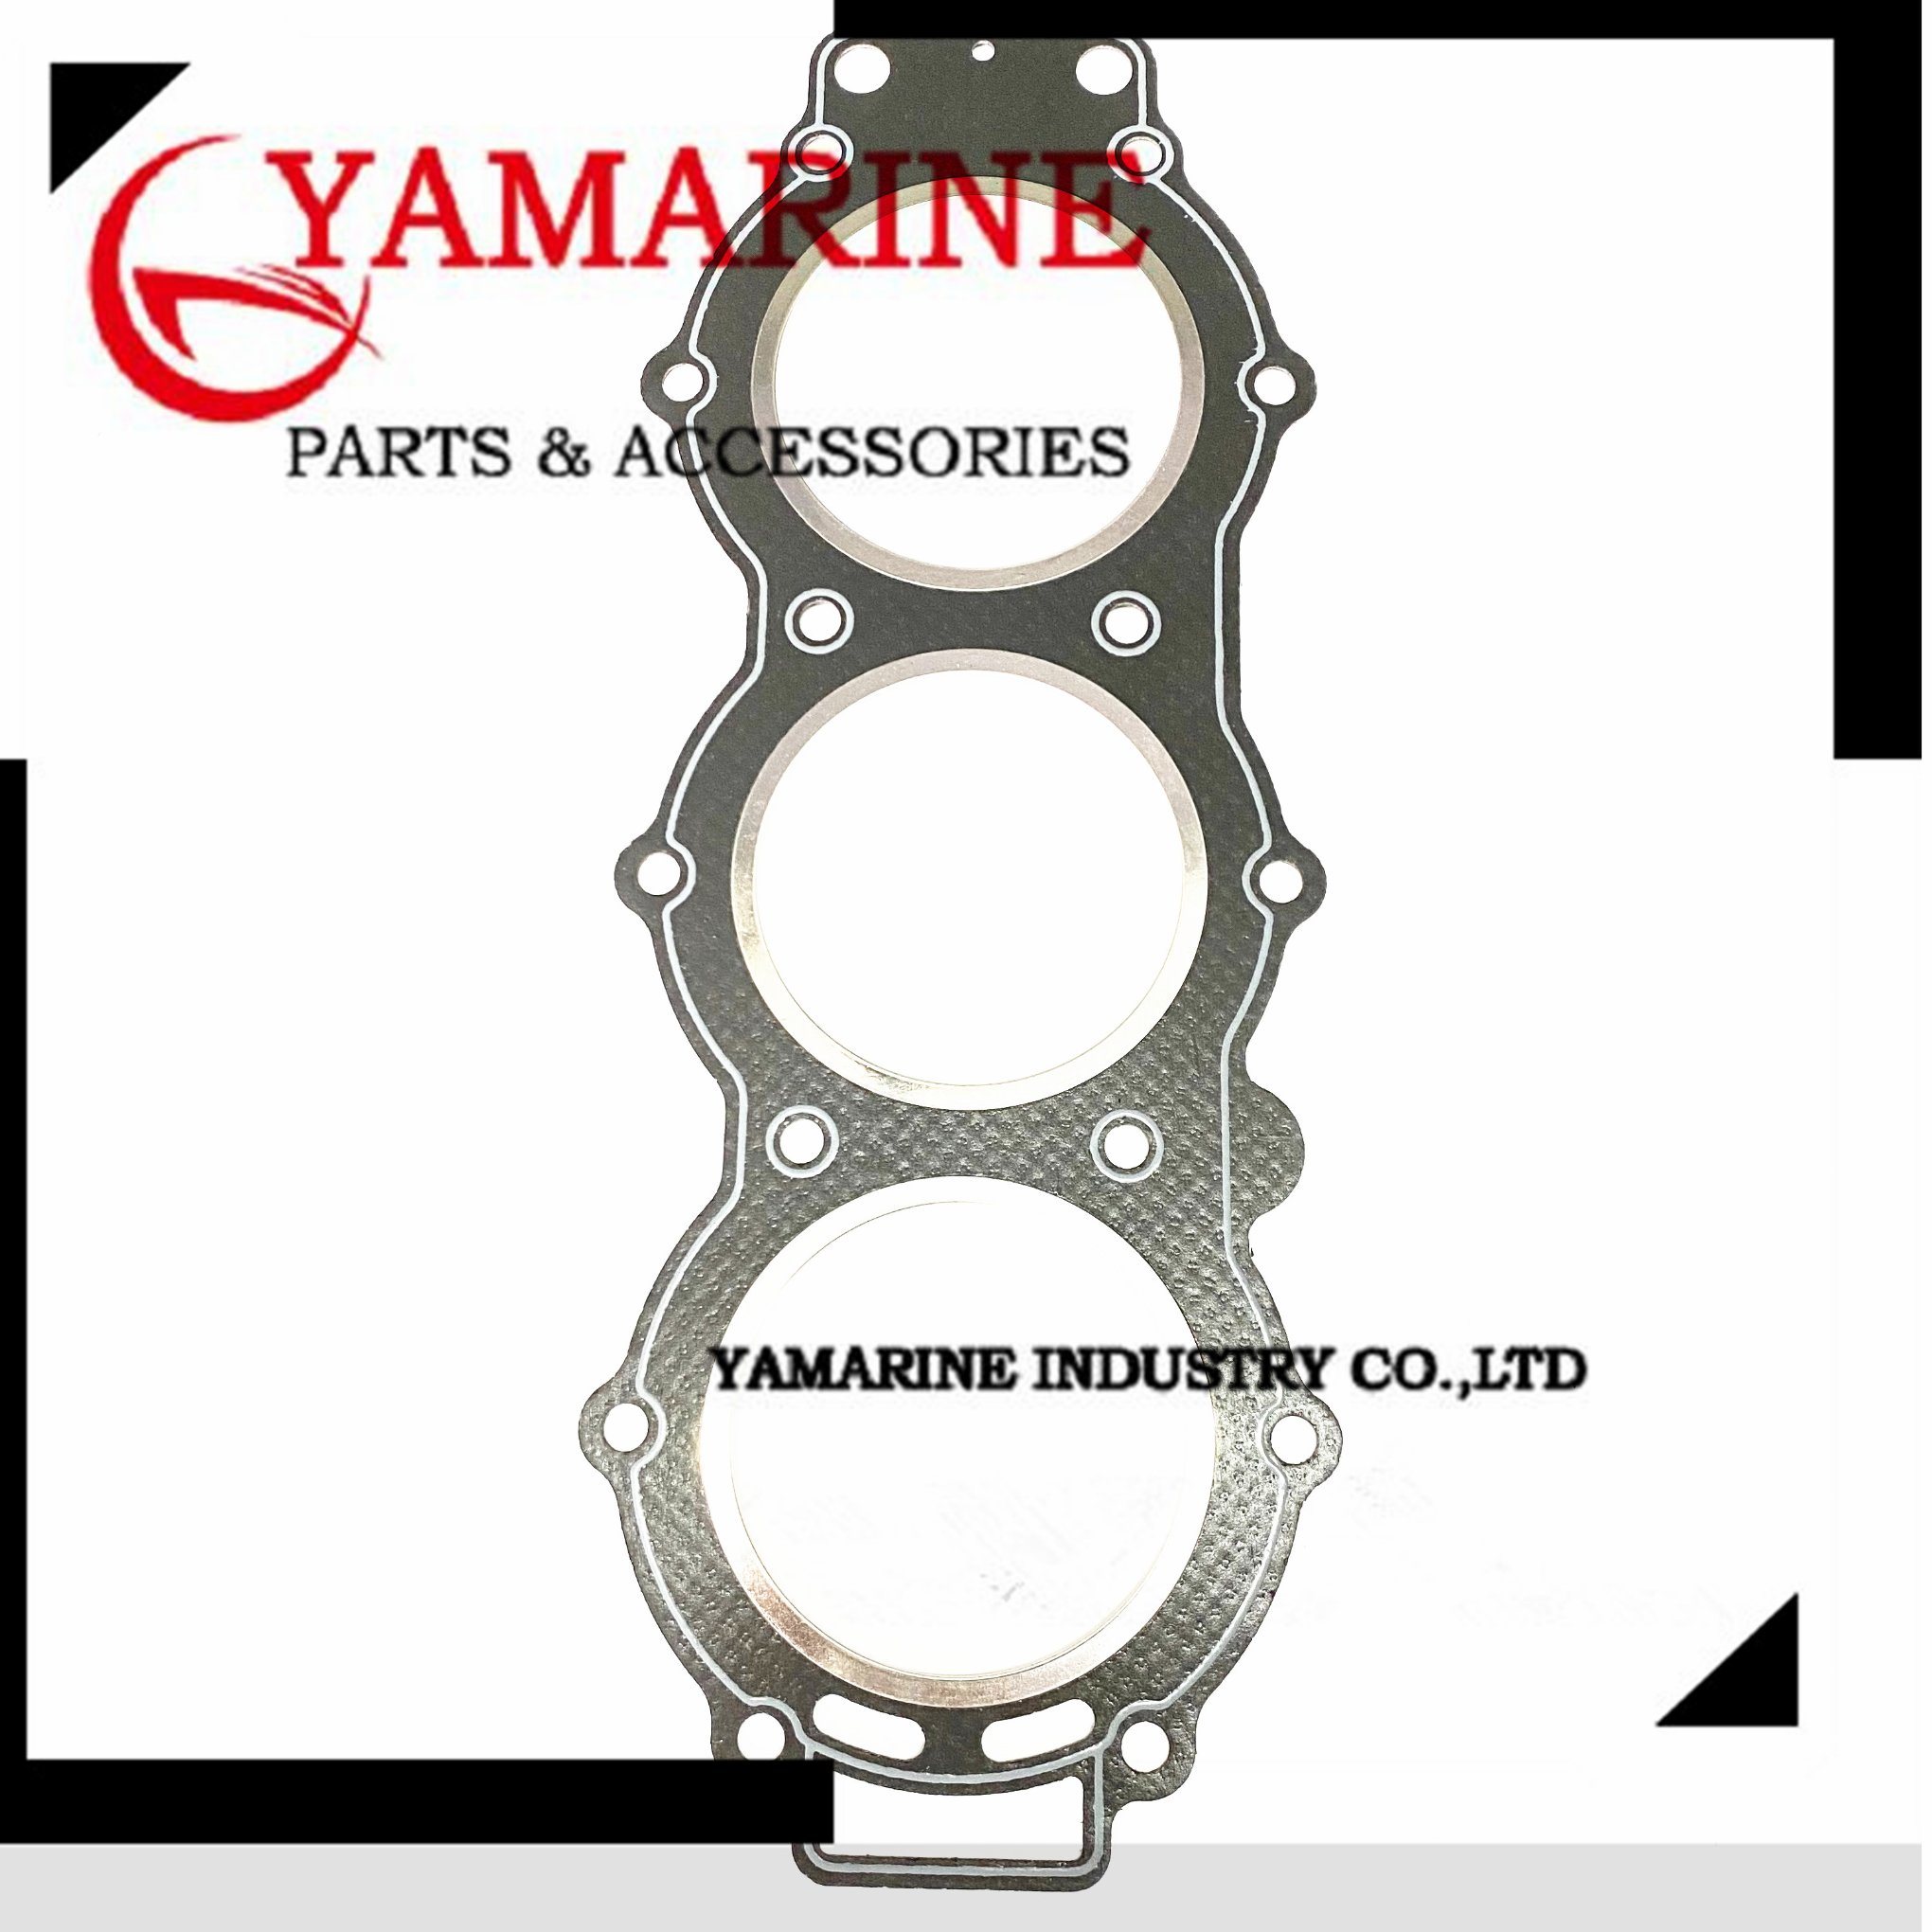 150HP YAMAHA Outboard Gasket 6g5-11181-00/A0/A1/A2, Head Gasket, Cylinder Gasket